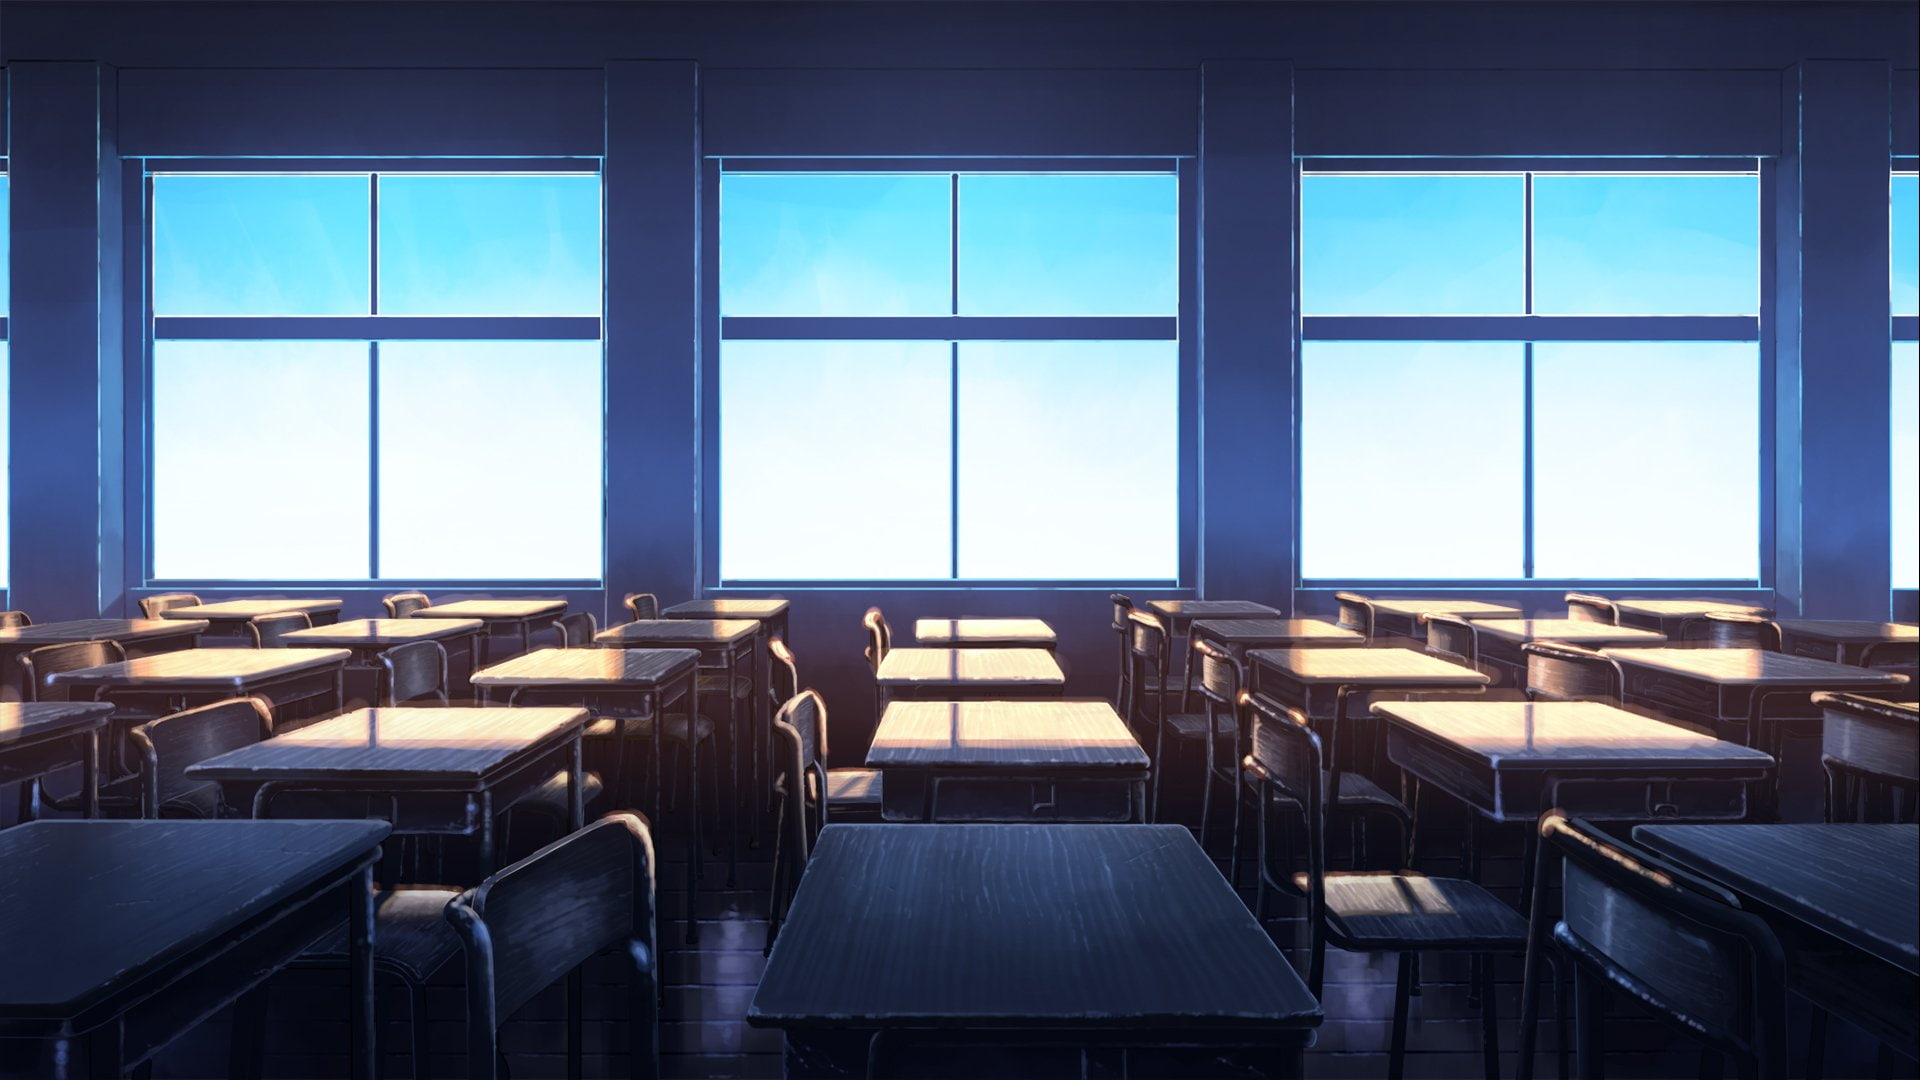 Anime, Original, School, seat, chair, window, indoors, empty